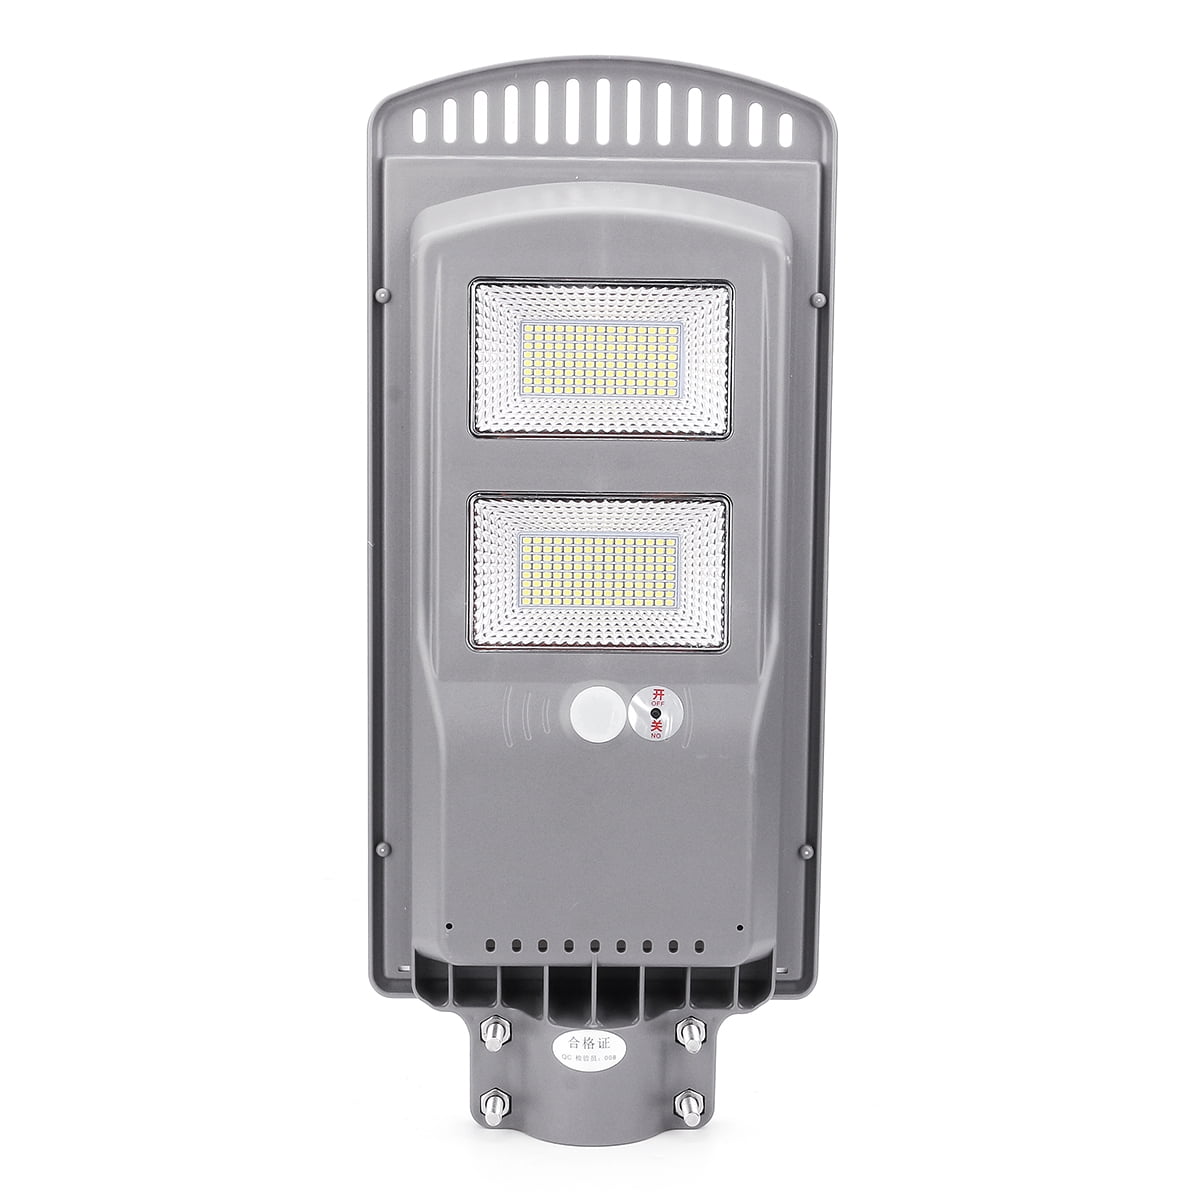 Solar Street Light LED Outdoor Lamp Fixture Motion Sensor 6000K 1800LM 18000mAh 